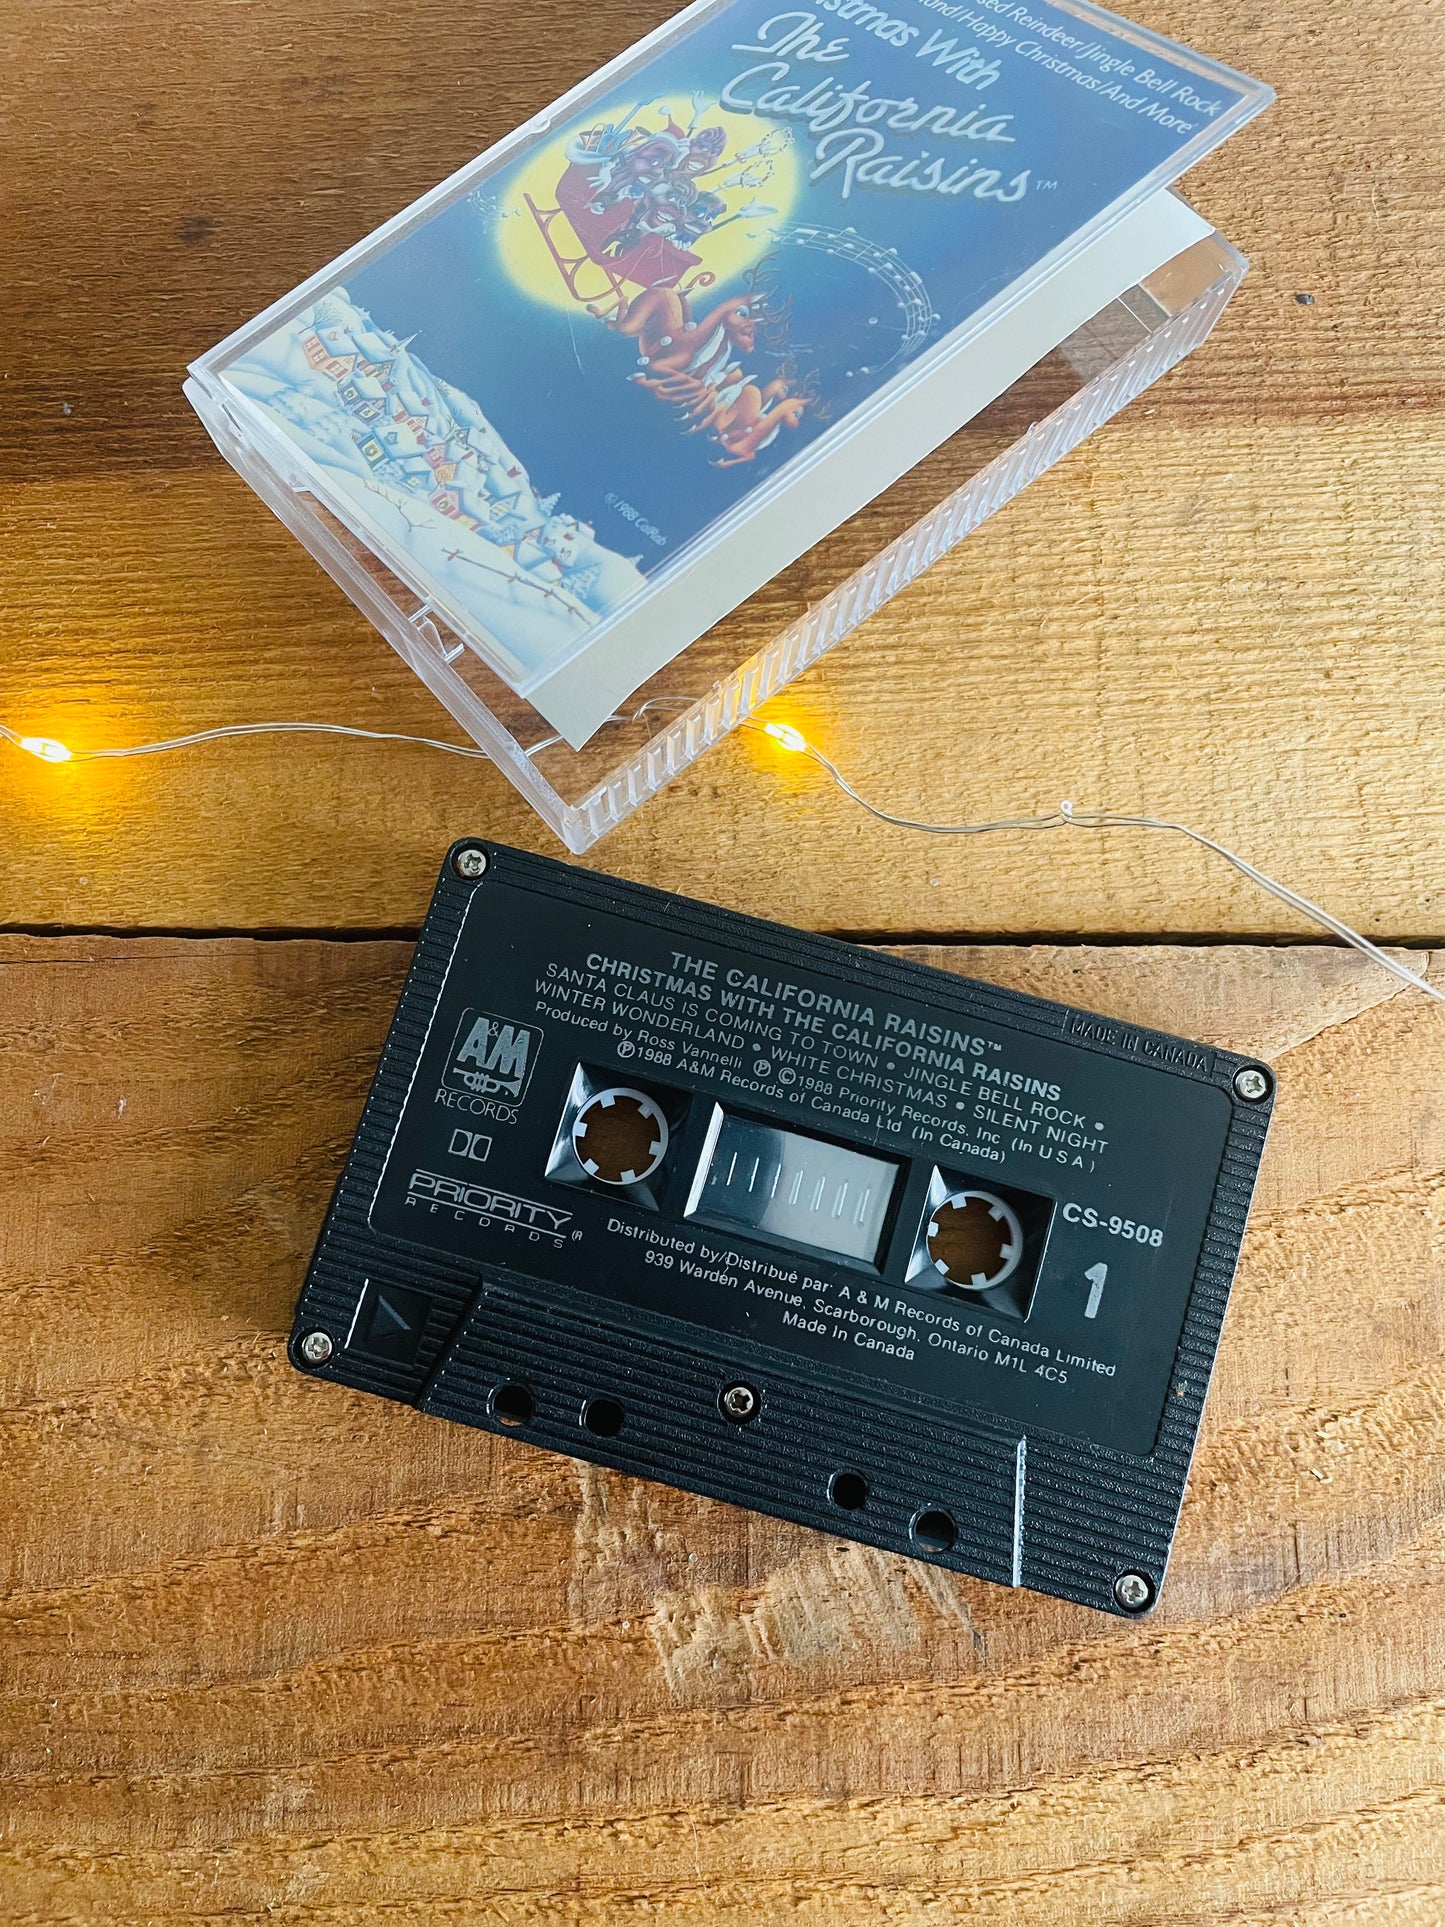 Christmas With the California Raisins Cassette Tape (1988)